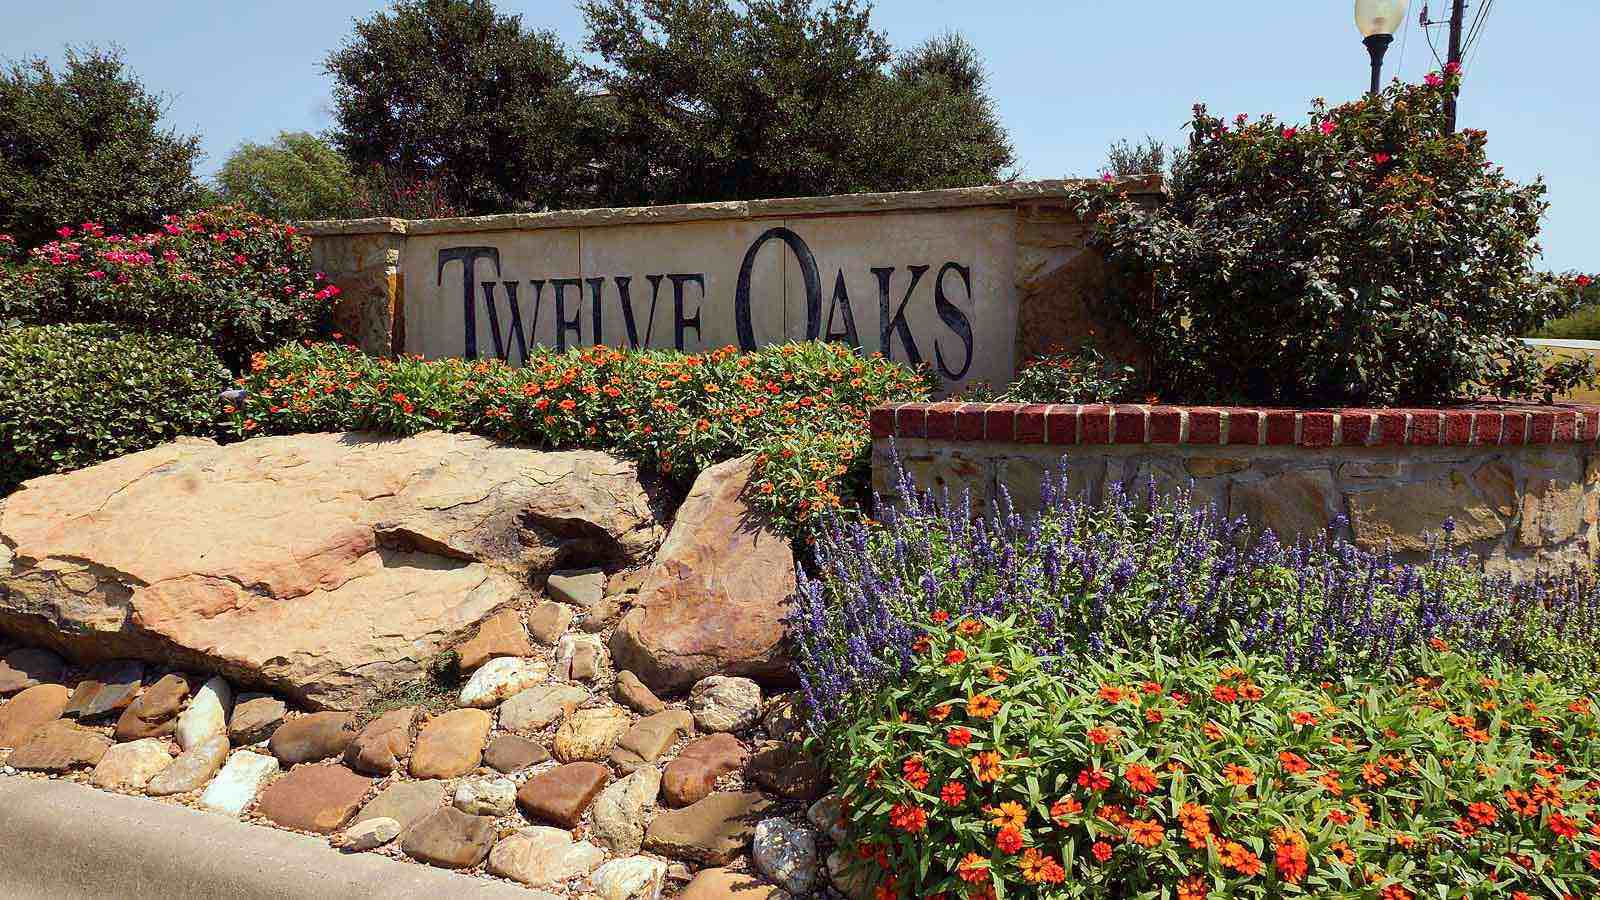 Twelve Oaks Entrance